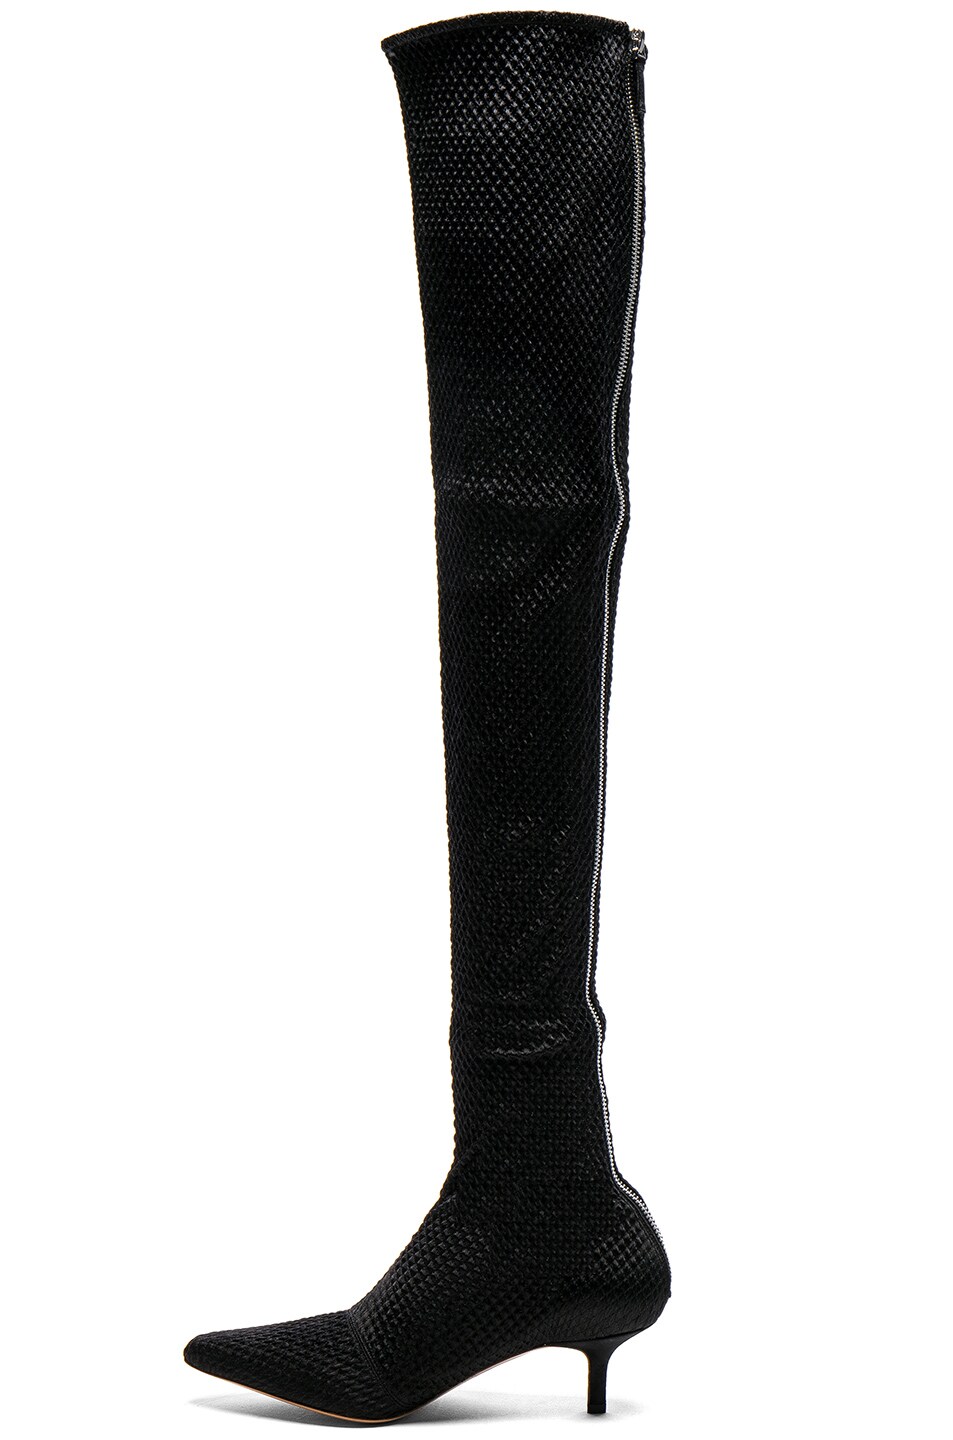 black thigh high boots small heel